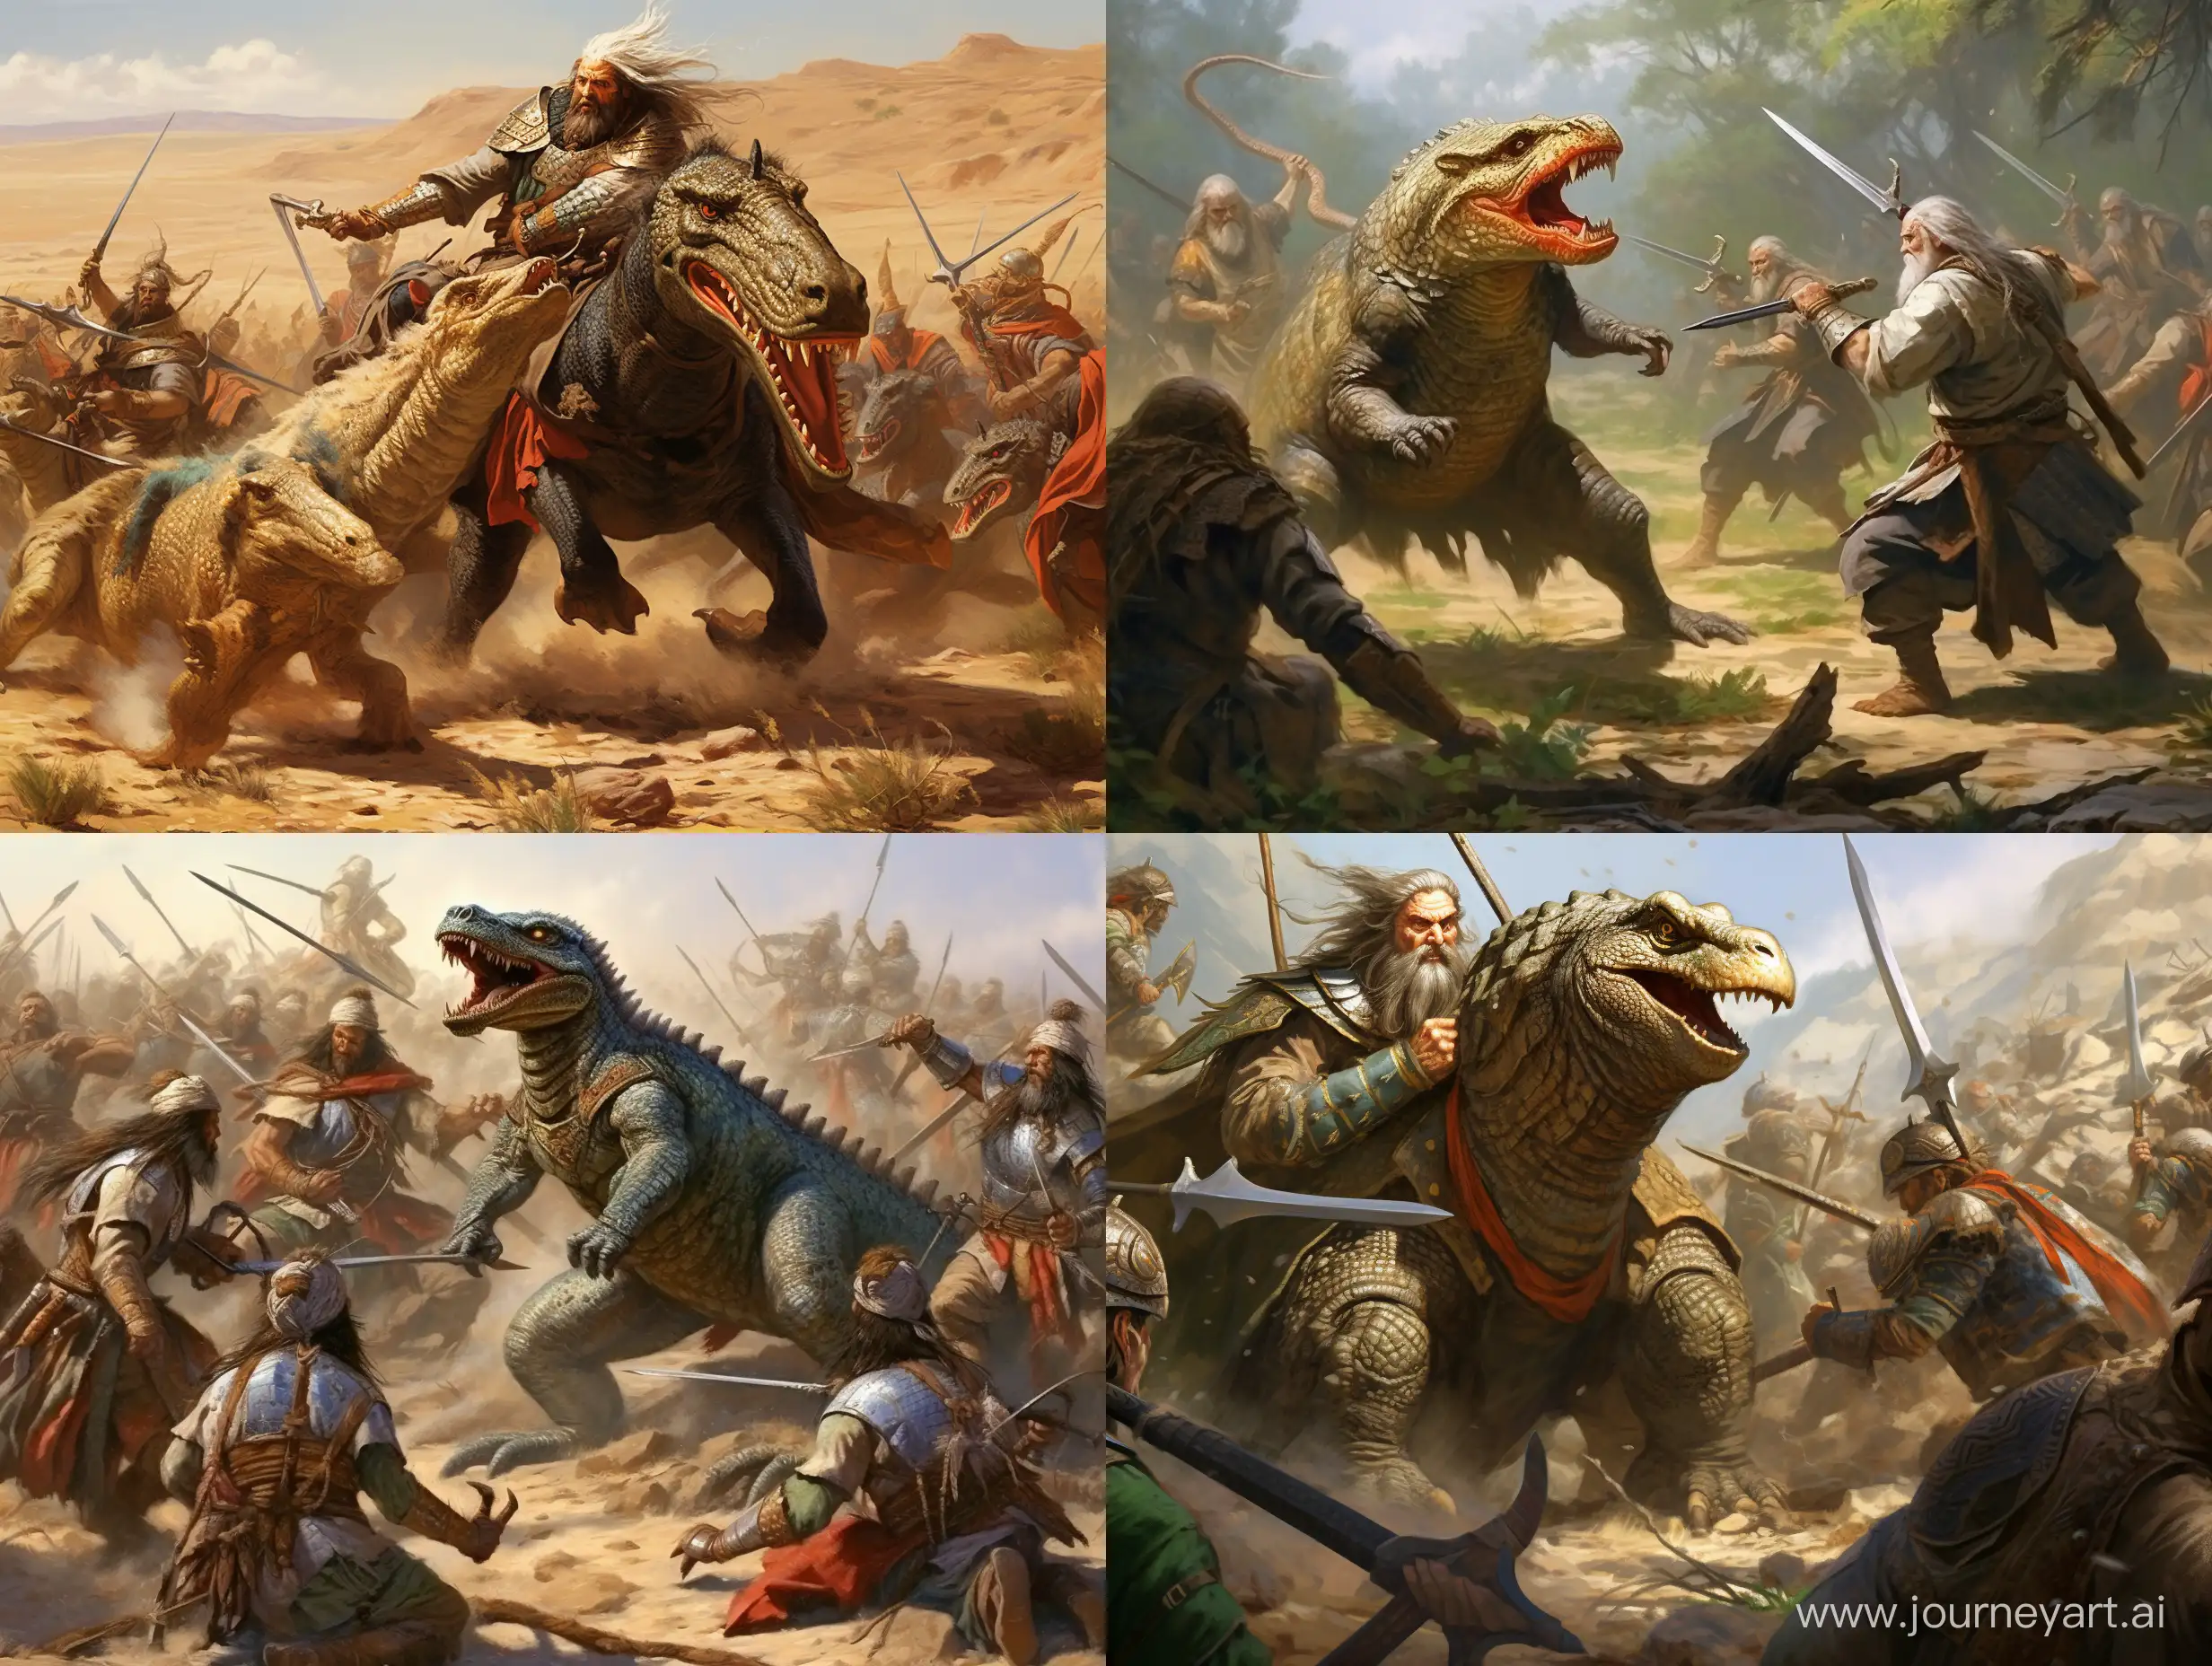 Epic-Battle-of-Ancient-Rus-Warriors-Against-Lizards